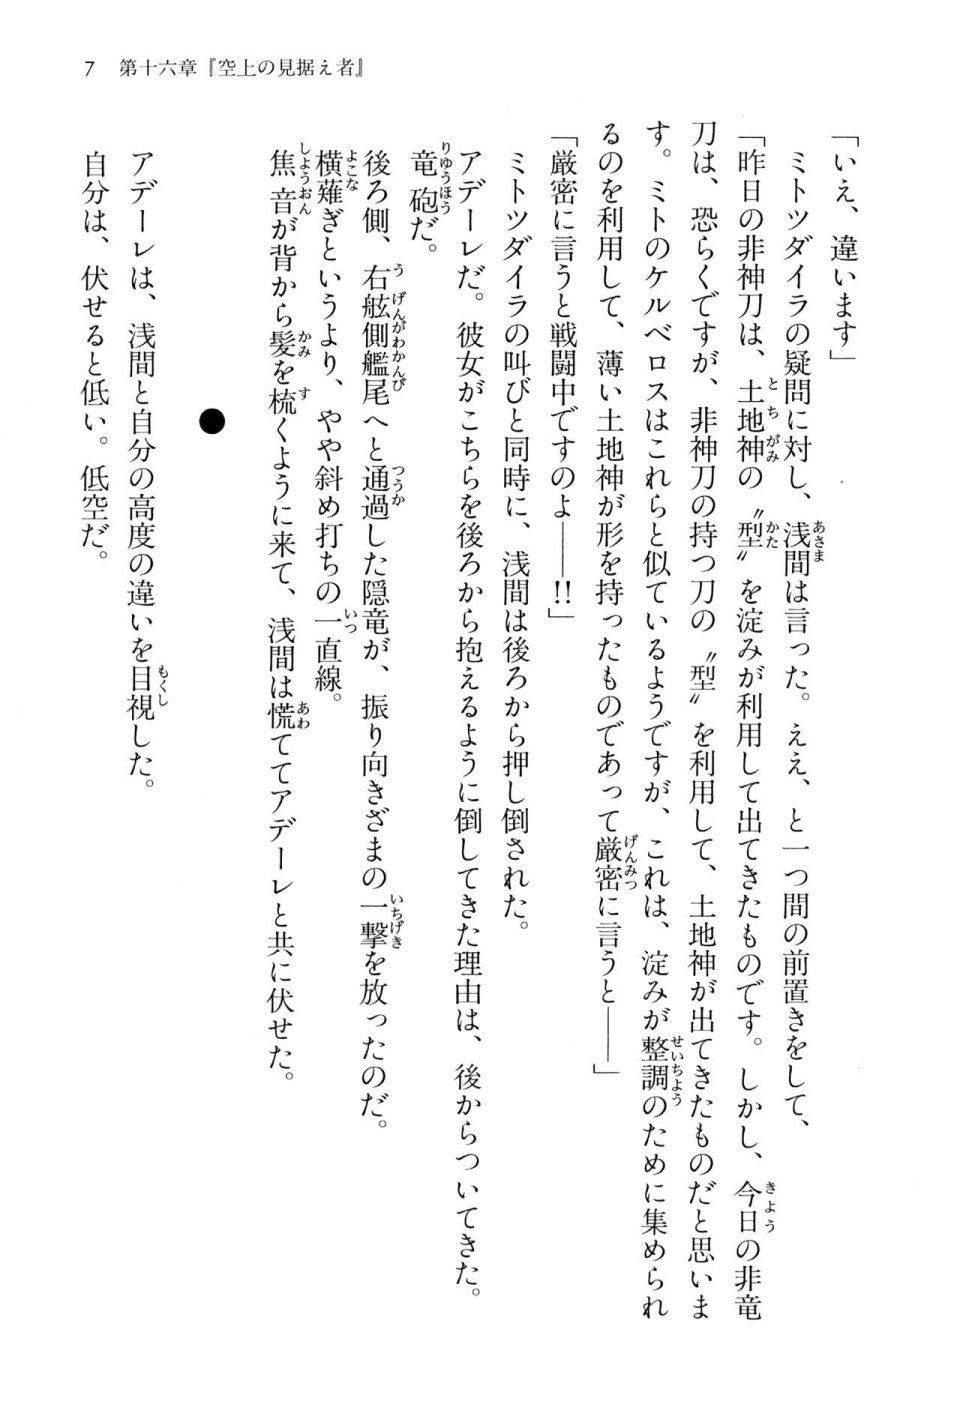 Kyoukai Senjou no Horizon BD Special Mininovel Vol 4(2B) - Photo #11